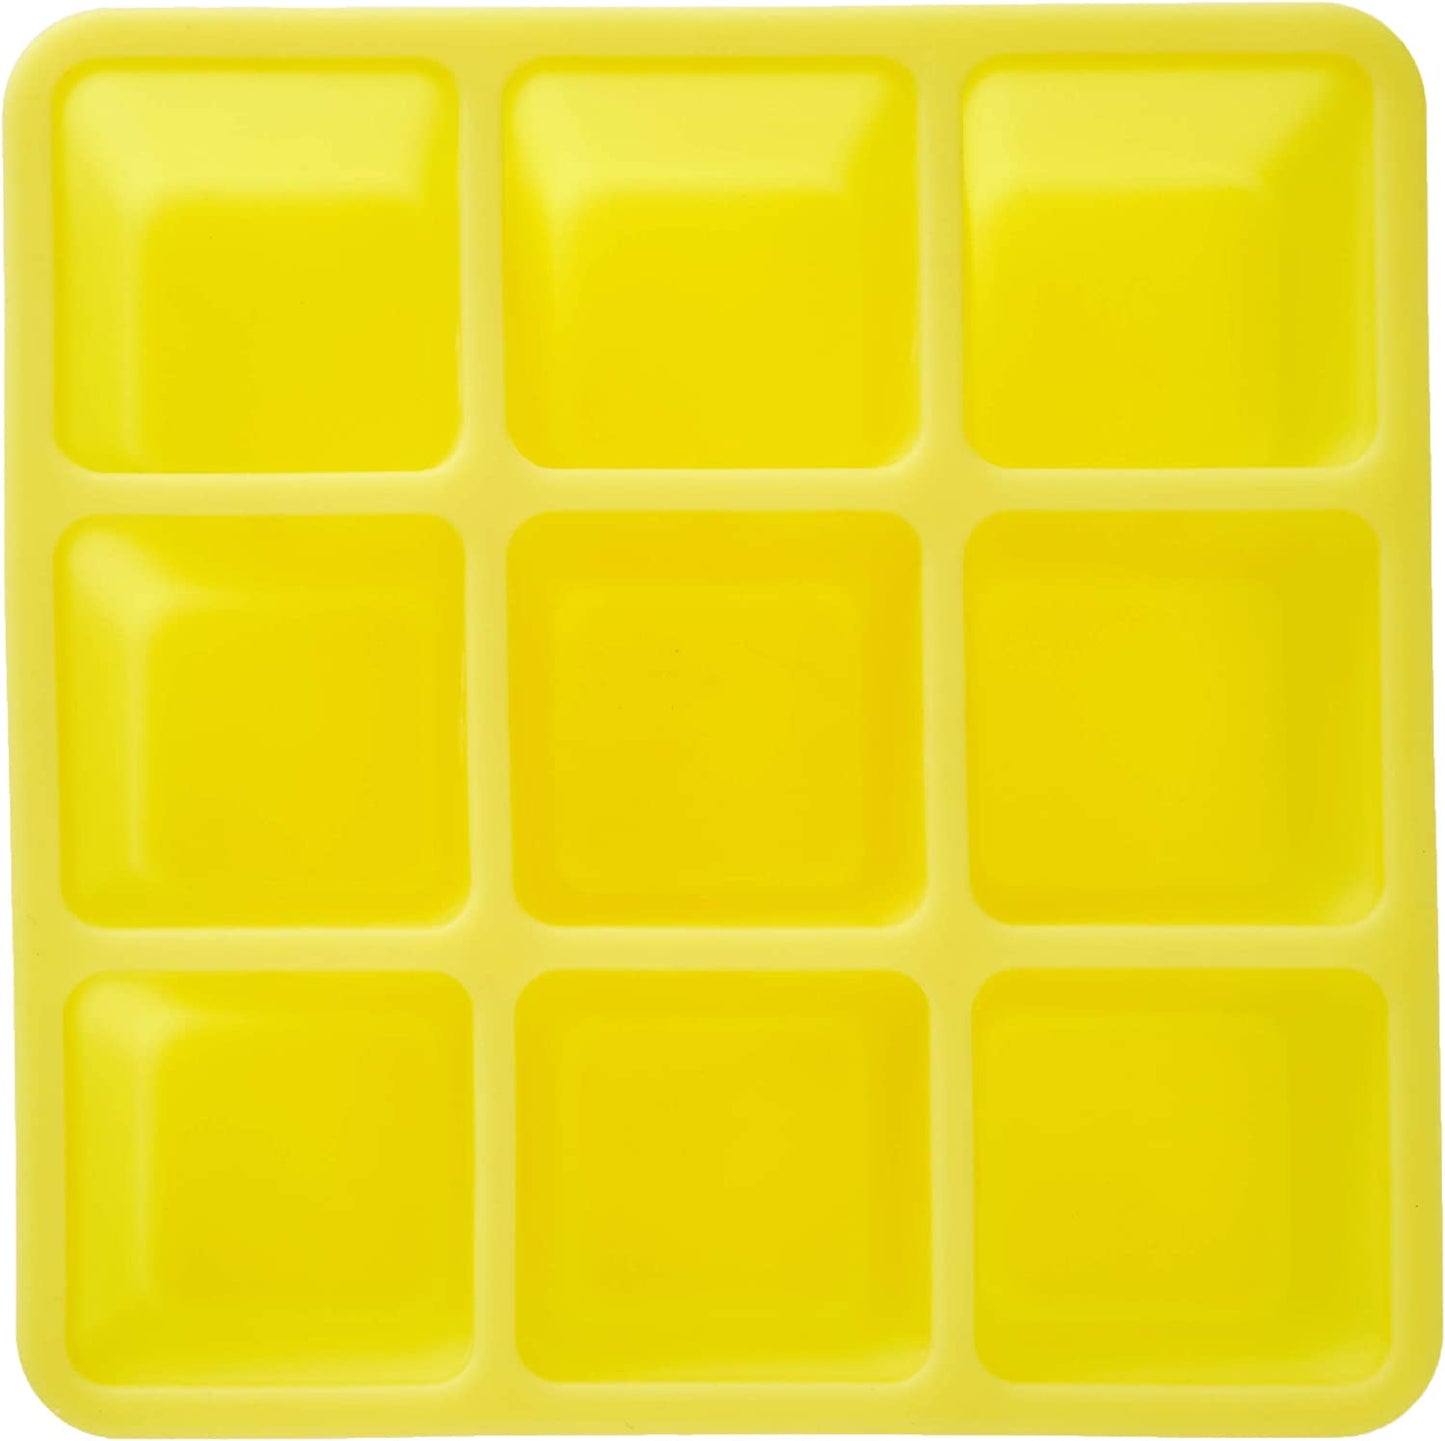 NUK - Bandeja de Cubo de Comida com Tampa para Congelar Comida 60ml -  6 meses+ - Amarelo